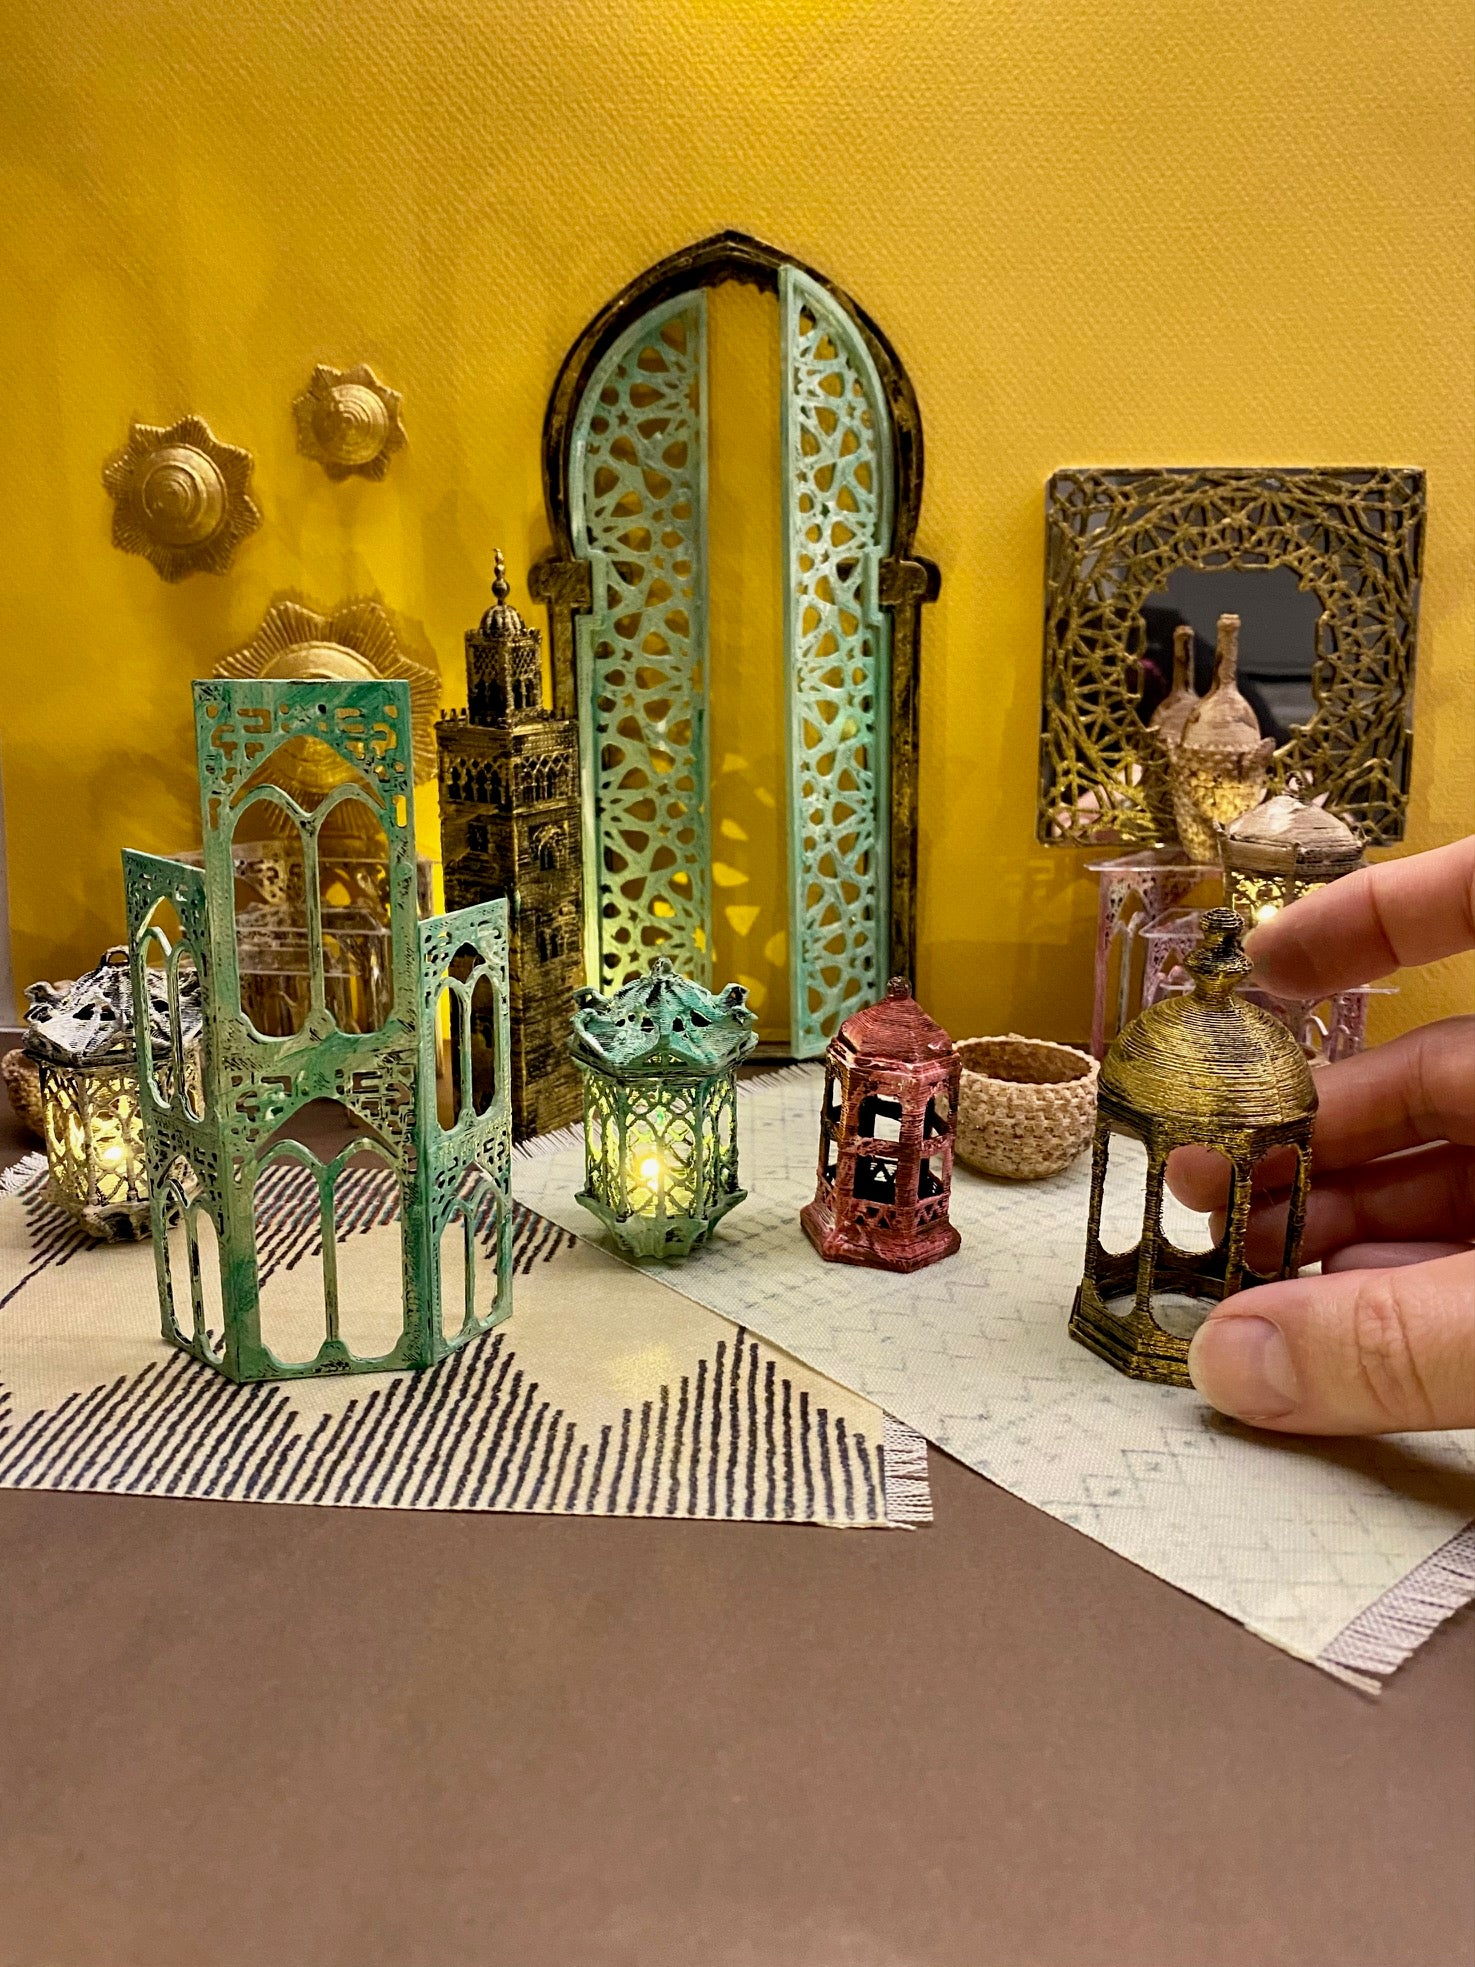 Miniature Moroccan Lanterns